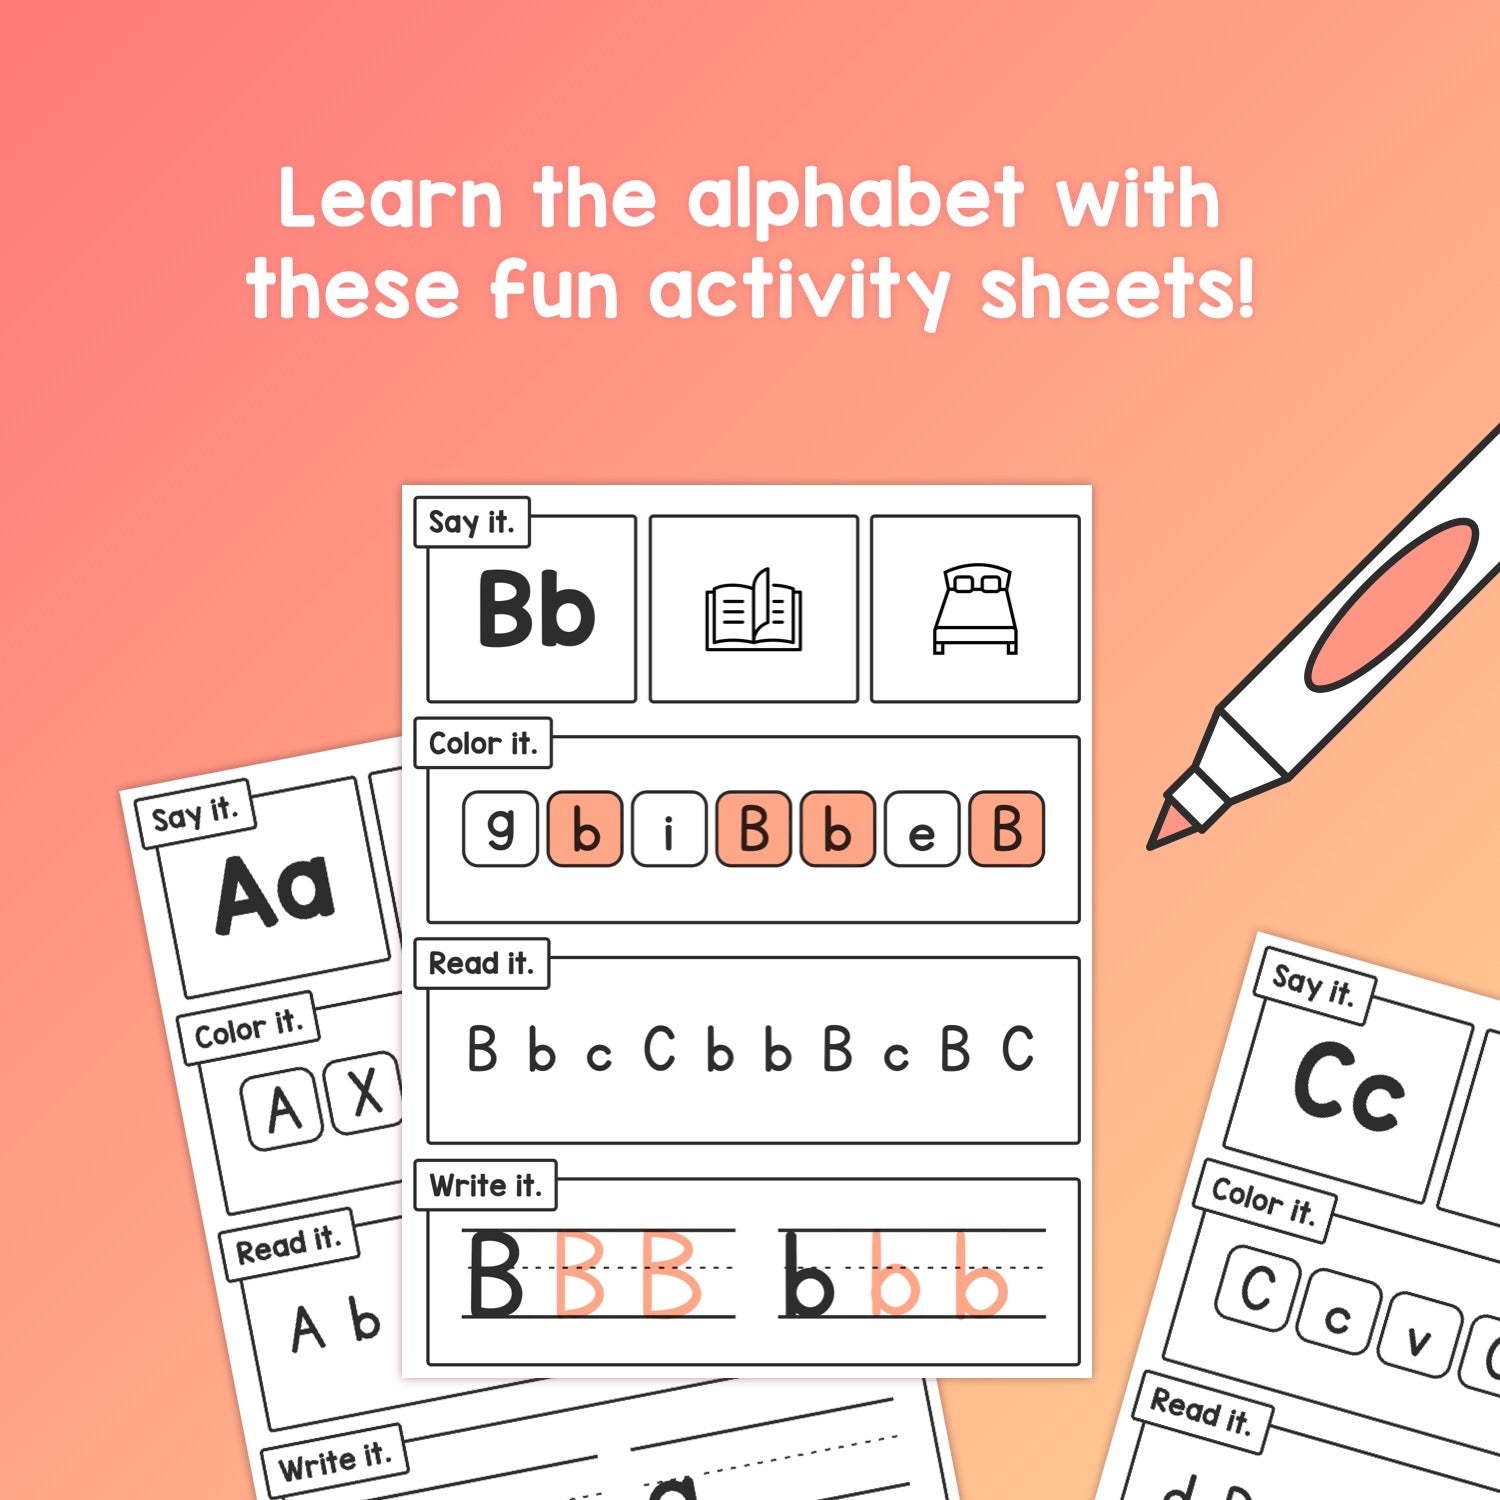 Idea for teaching the alphabet to kids